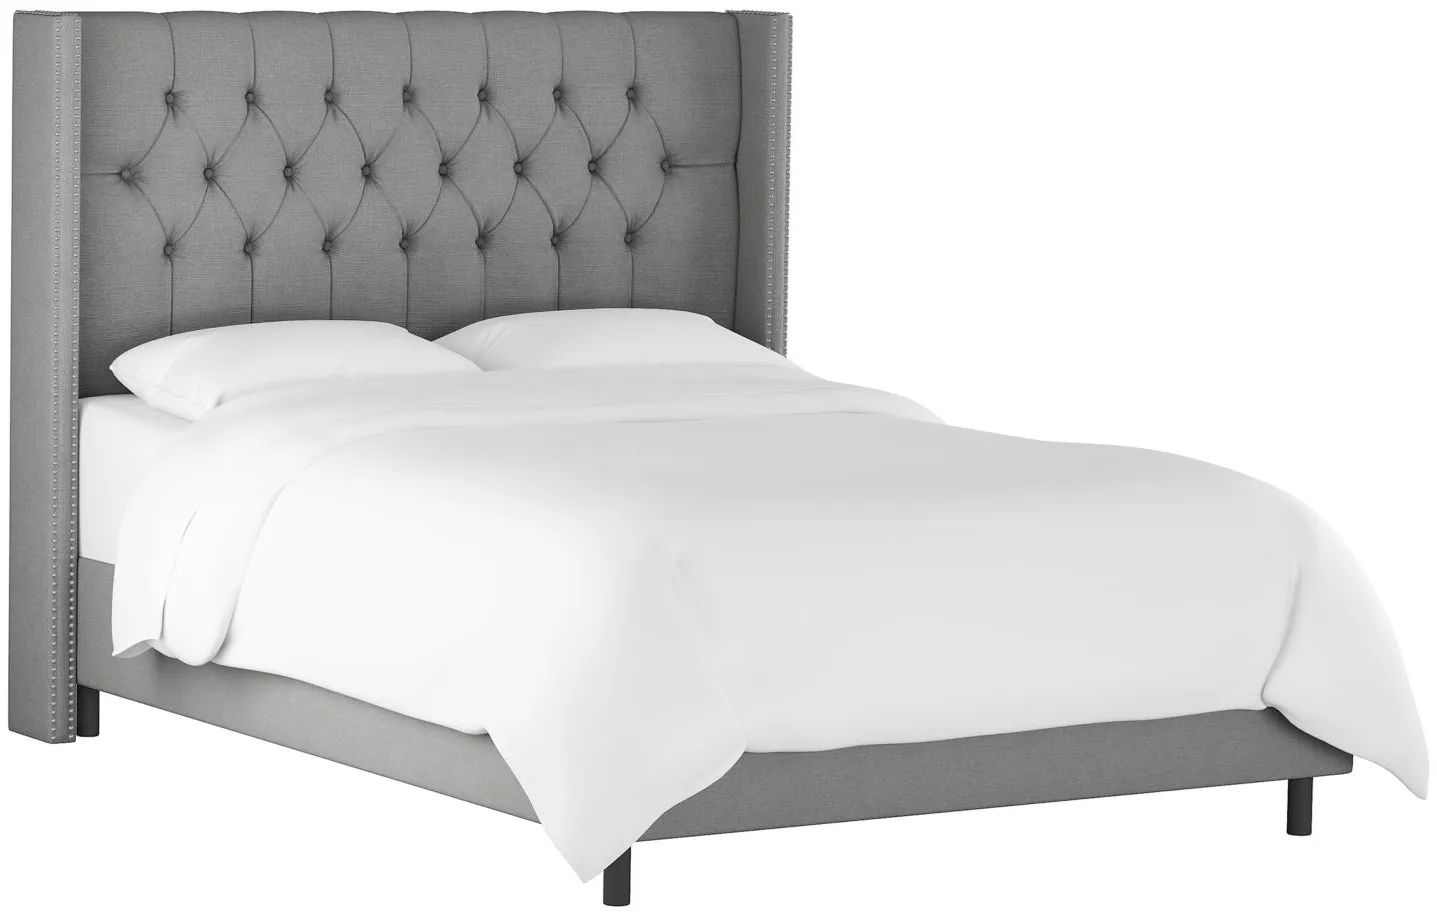 Cornelius Wingback Bed in Linen Gray by Skyline